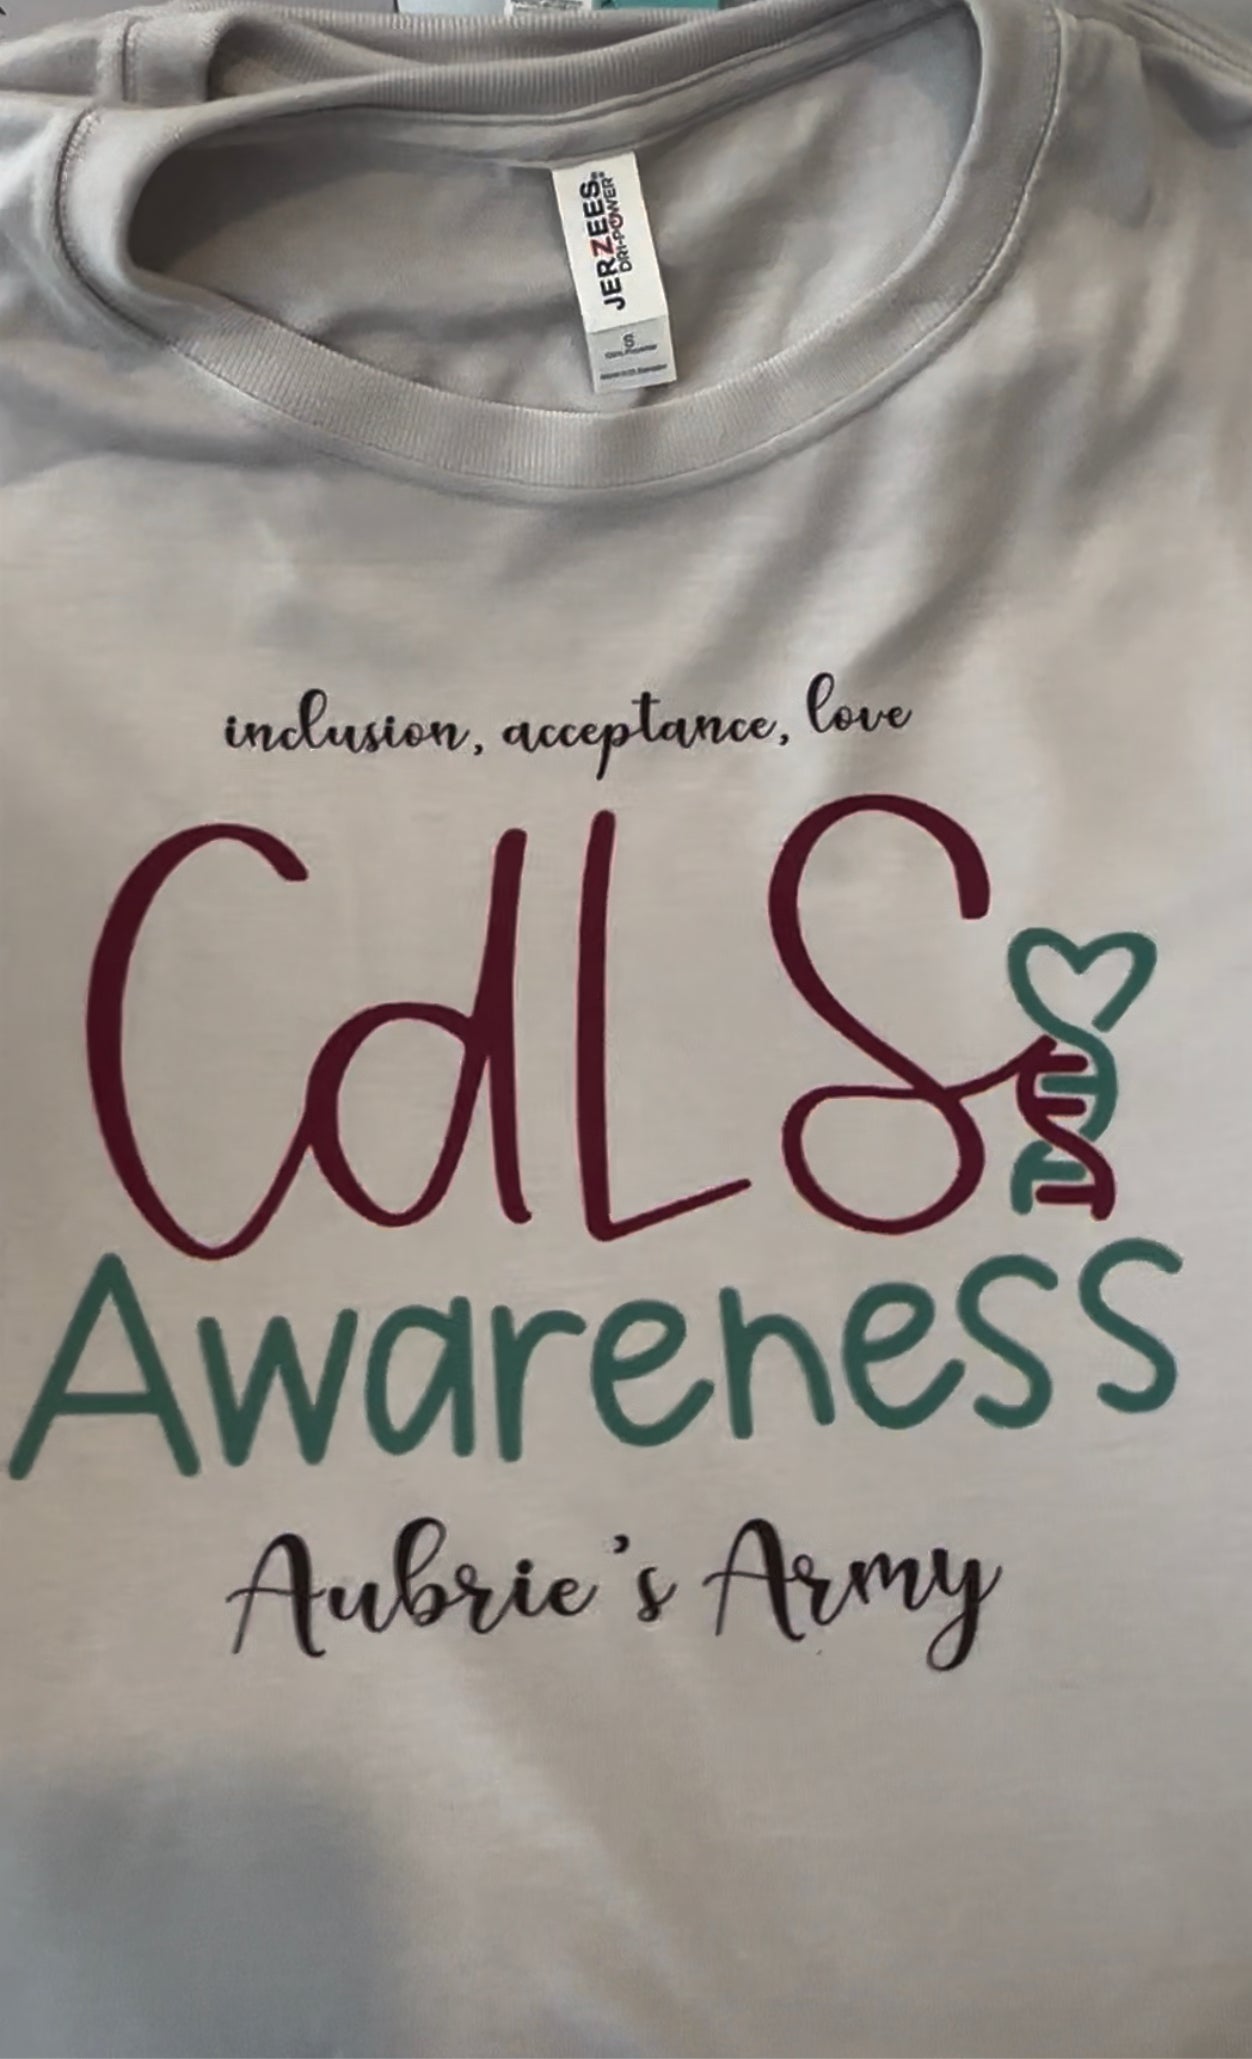 CdLS Awareness T-Shirt - Aubrie’s Army